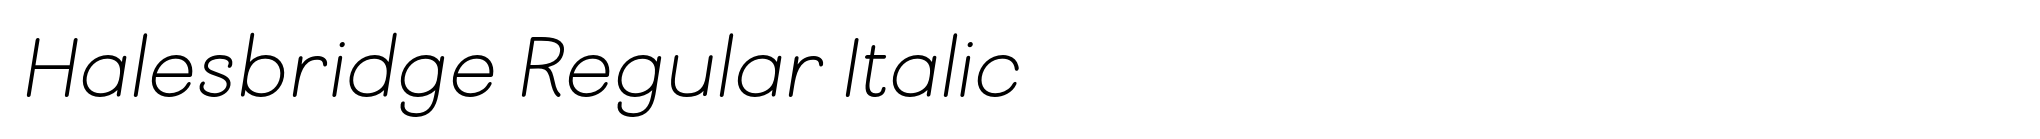 Halesbridge Regular Italic image